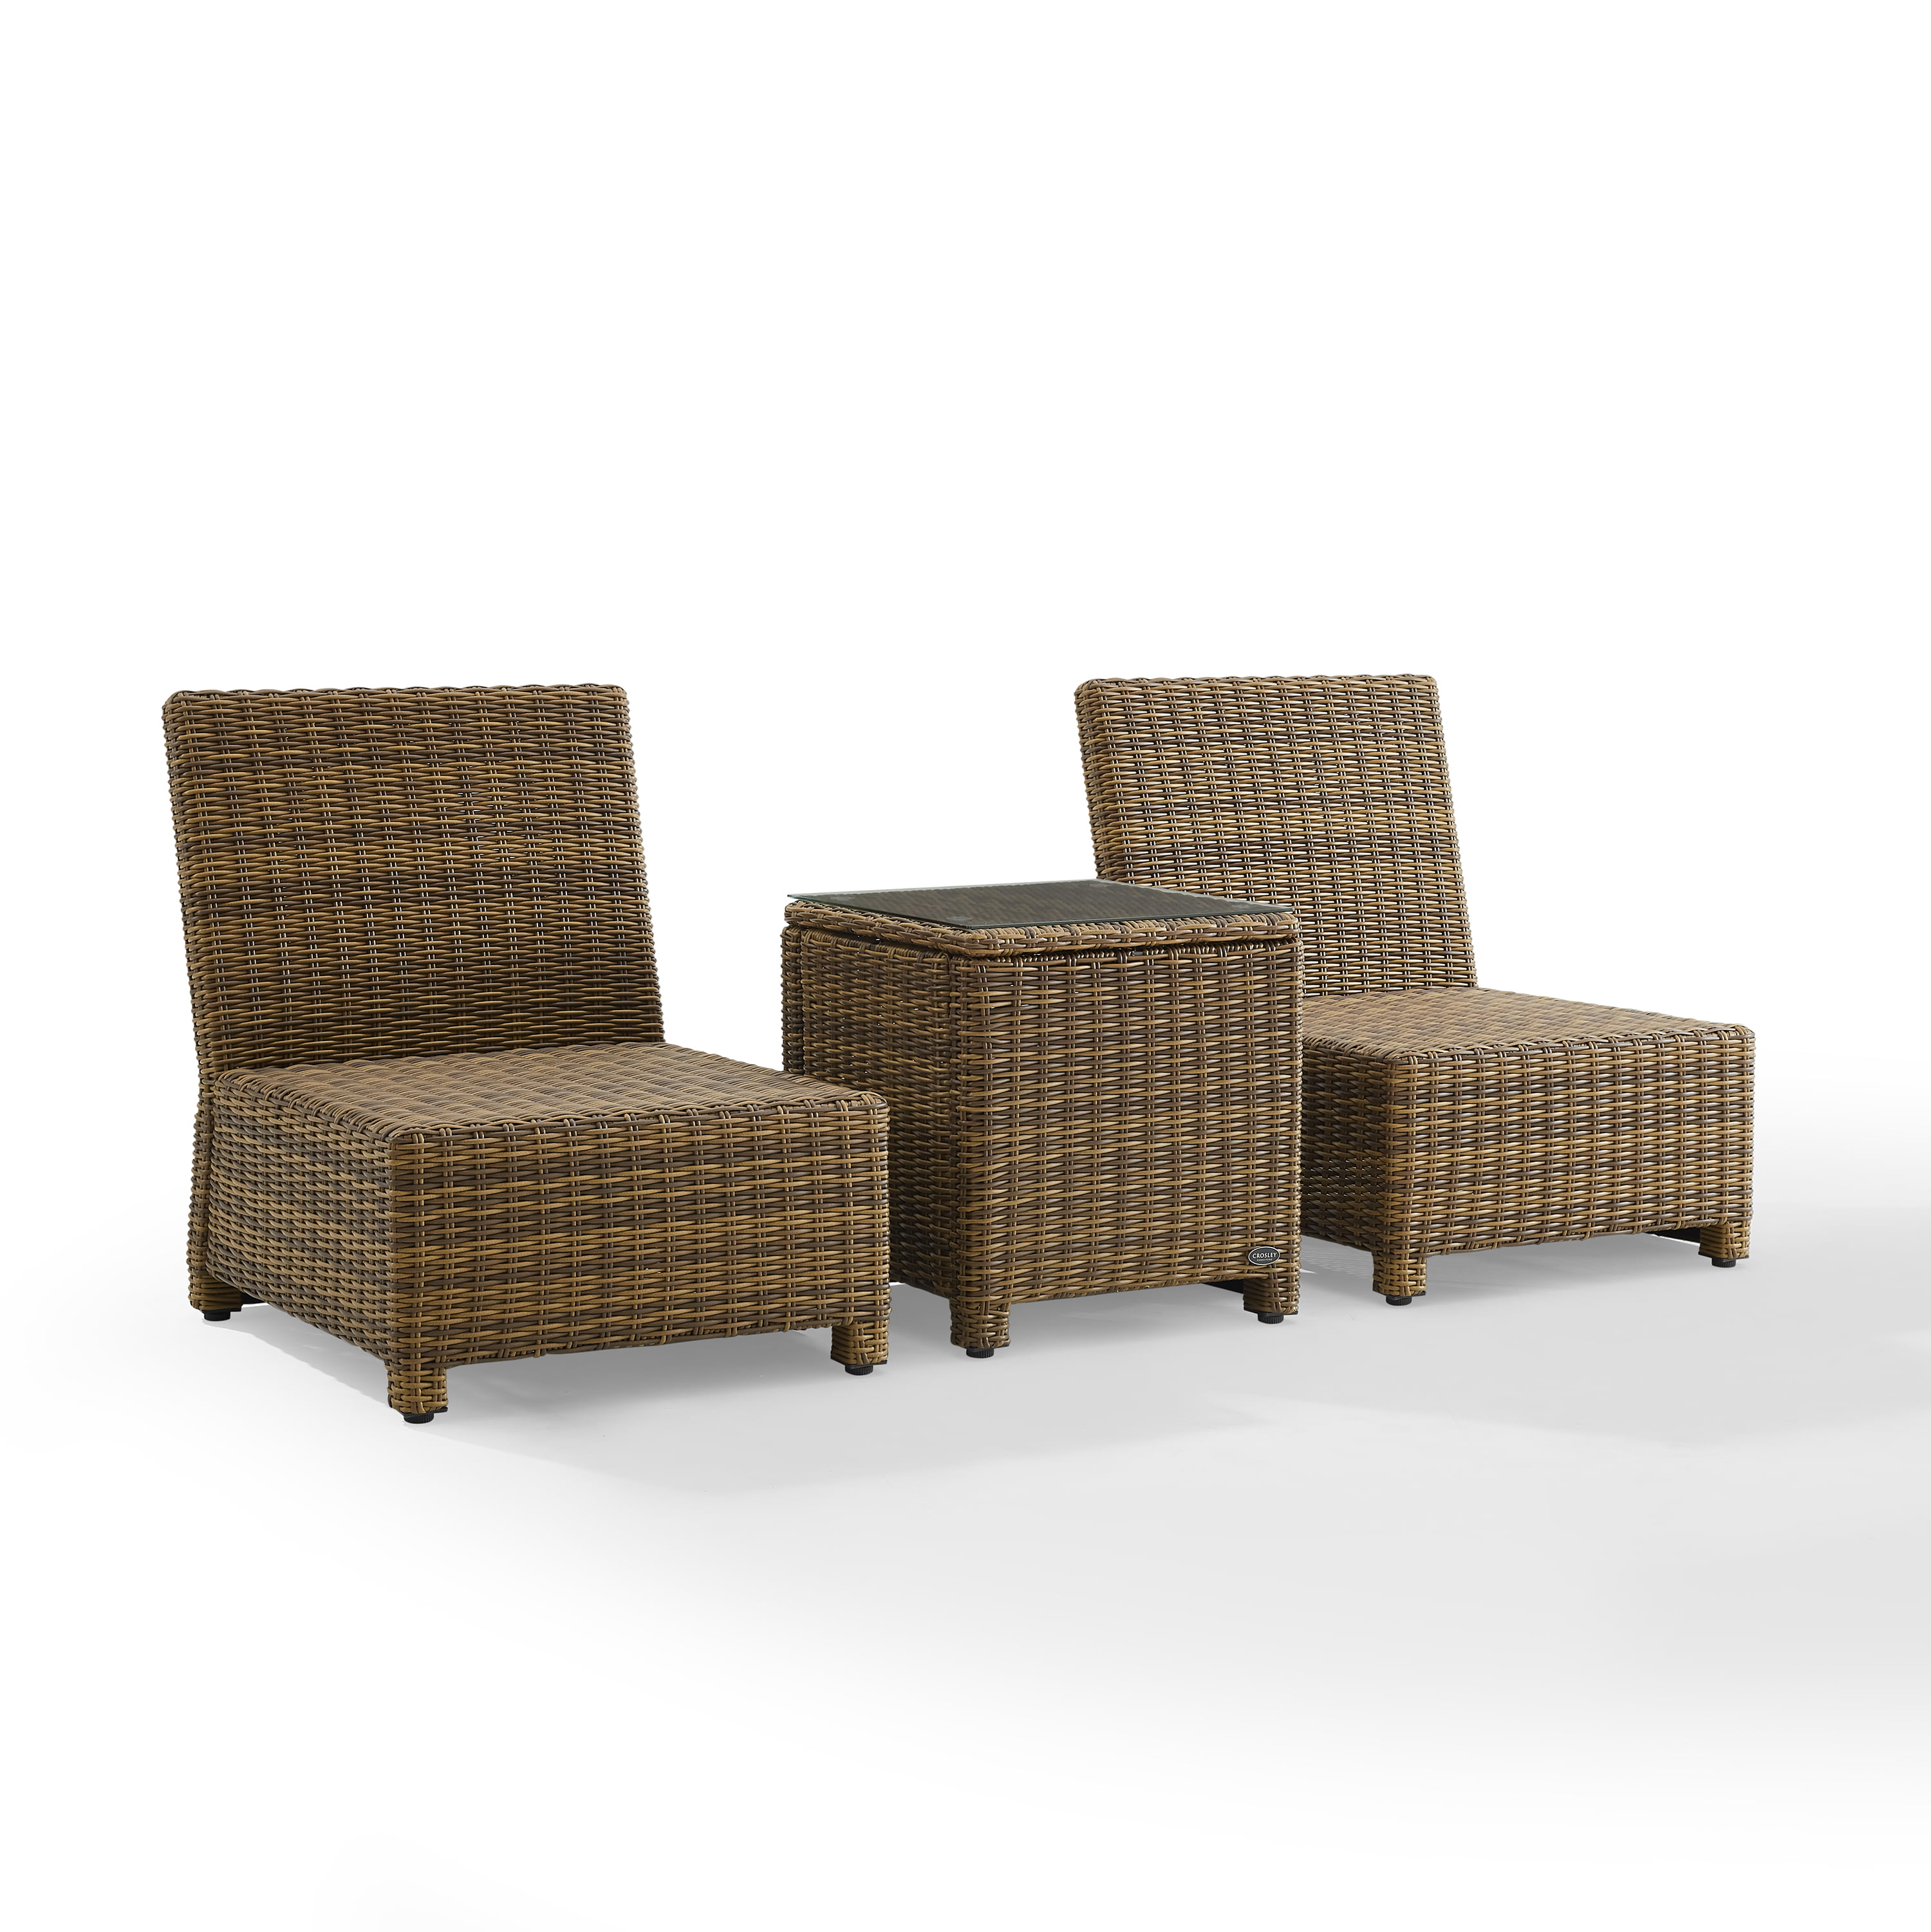 Crosley Furniture Bradenton 3 Piece, Crosley Outdoor Furniture Replacement Cushion Covers